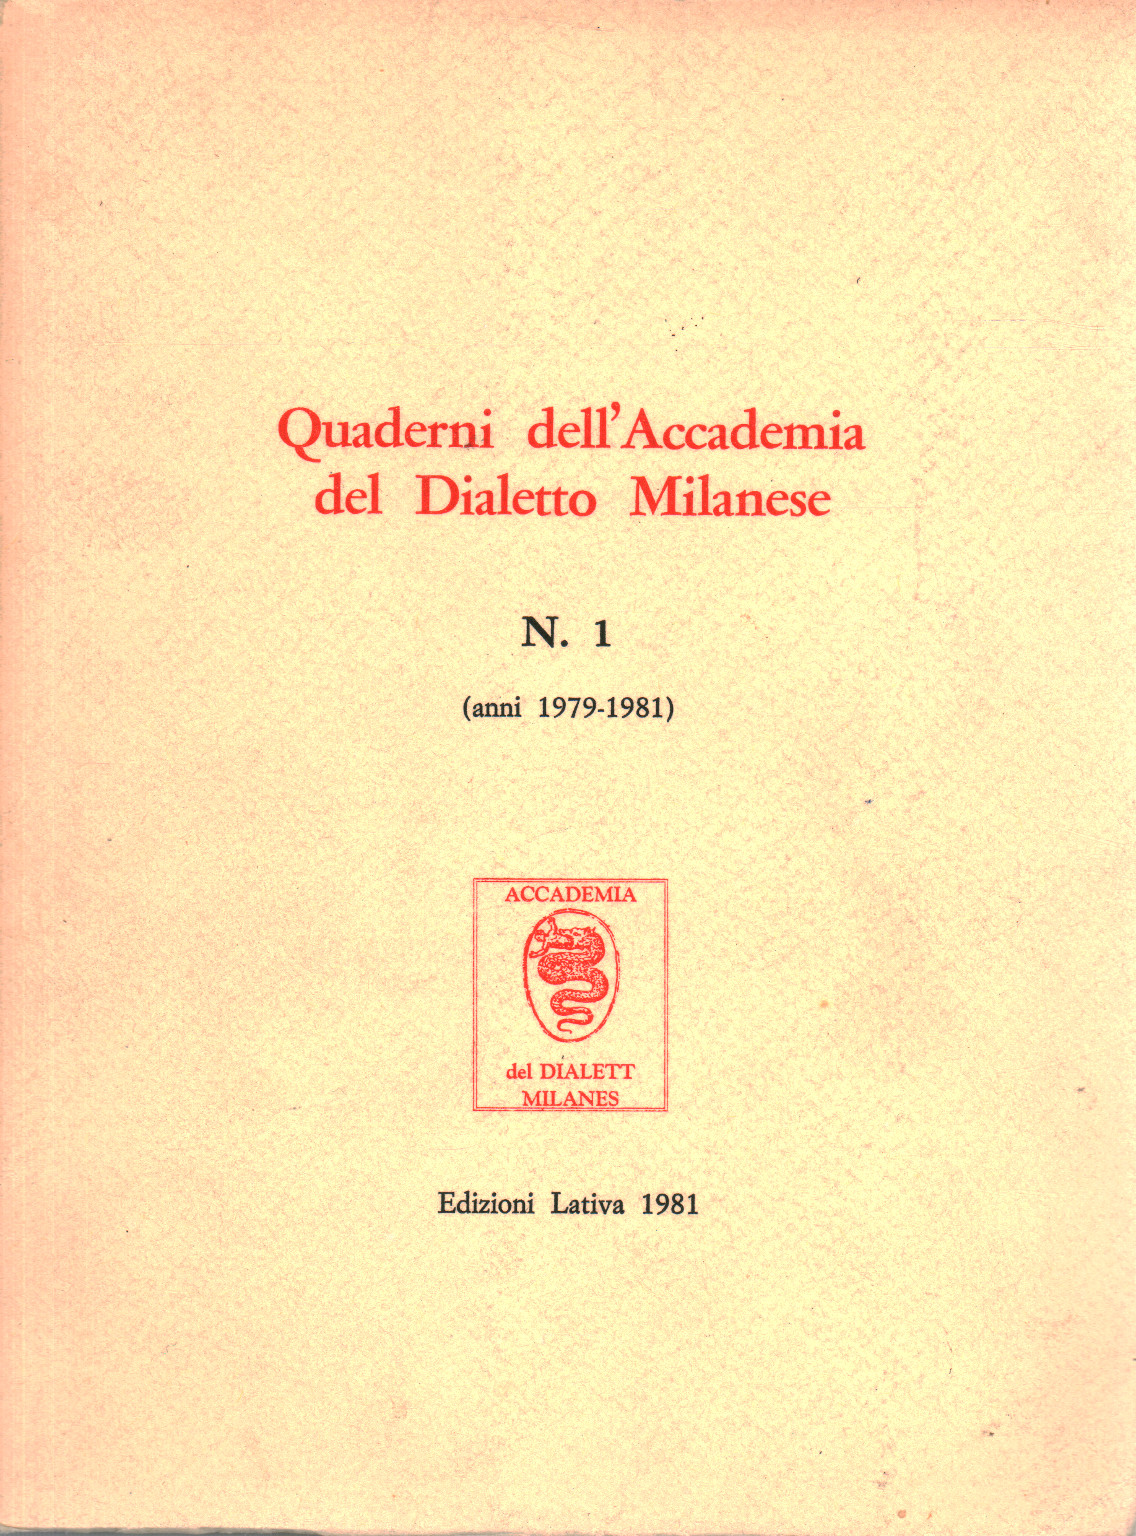 Quaderni dell'accademia of the Milanese Dialect No. 1, s.a.